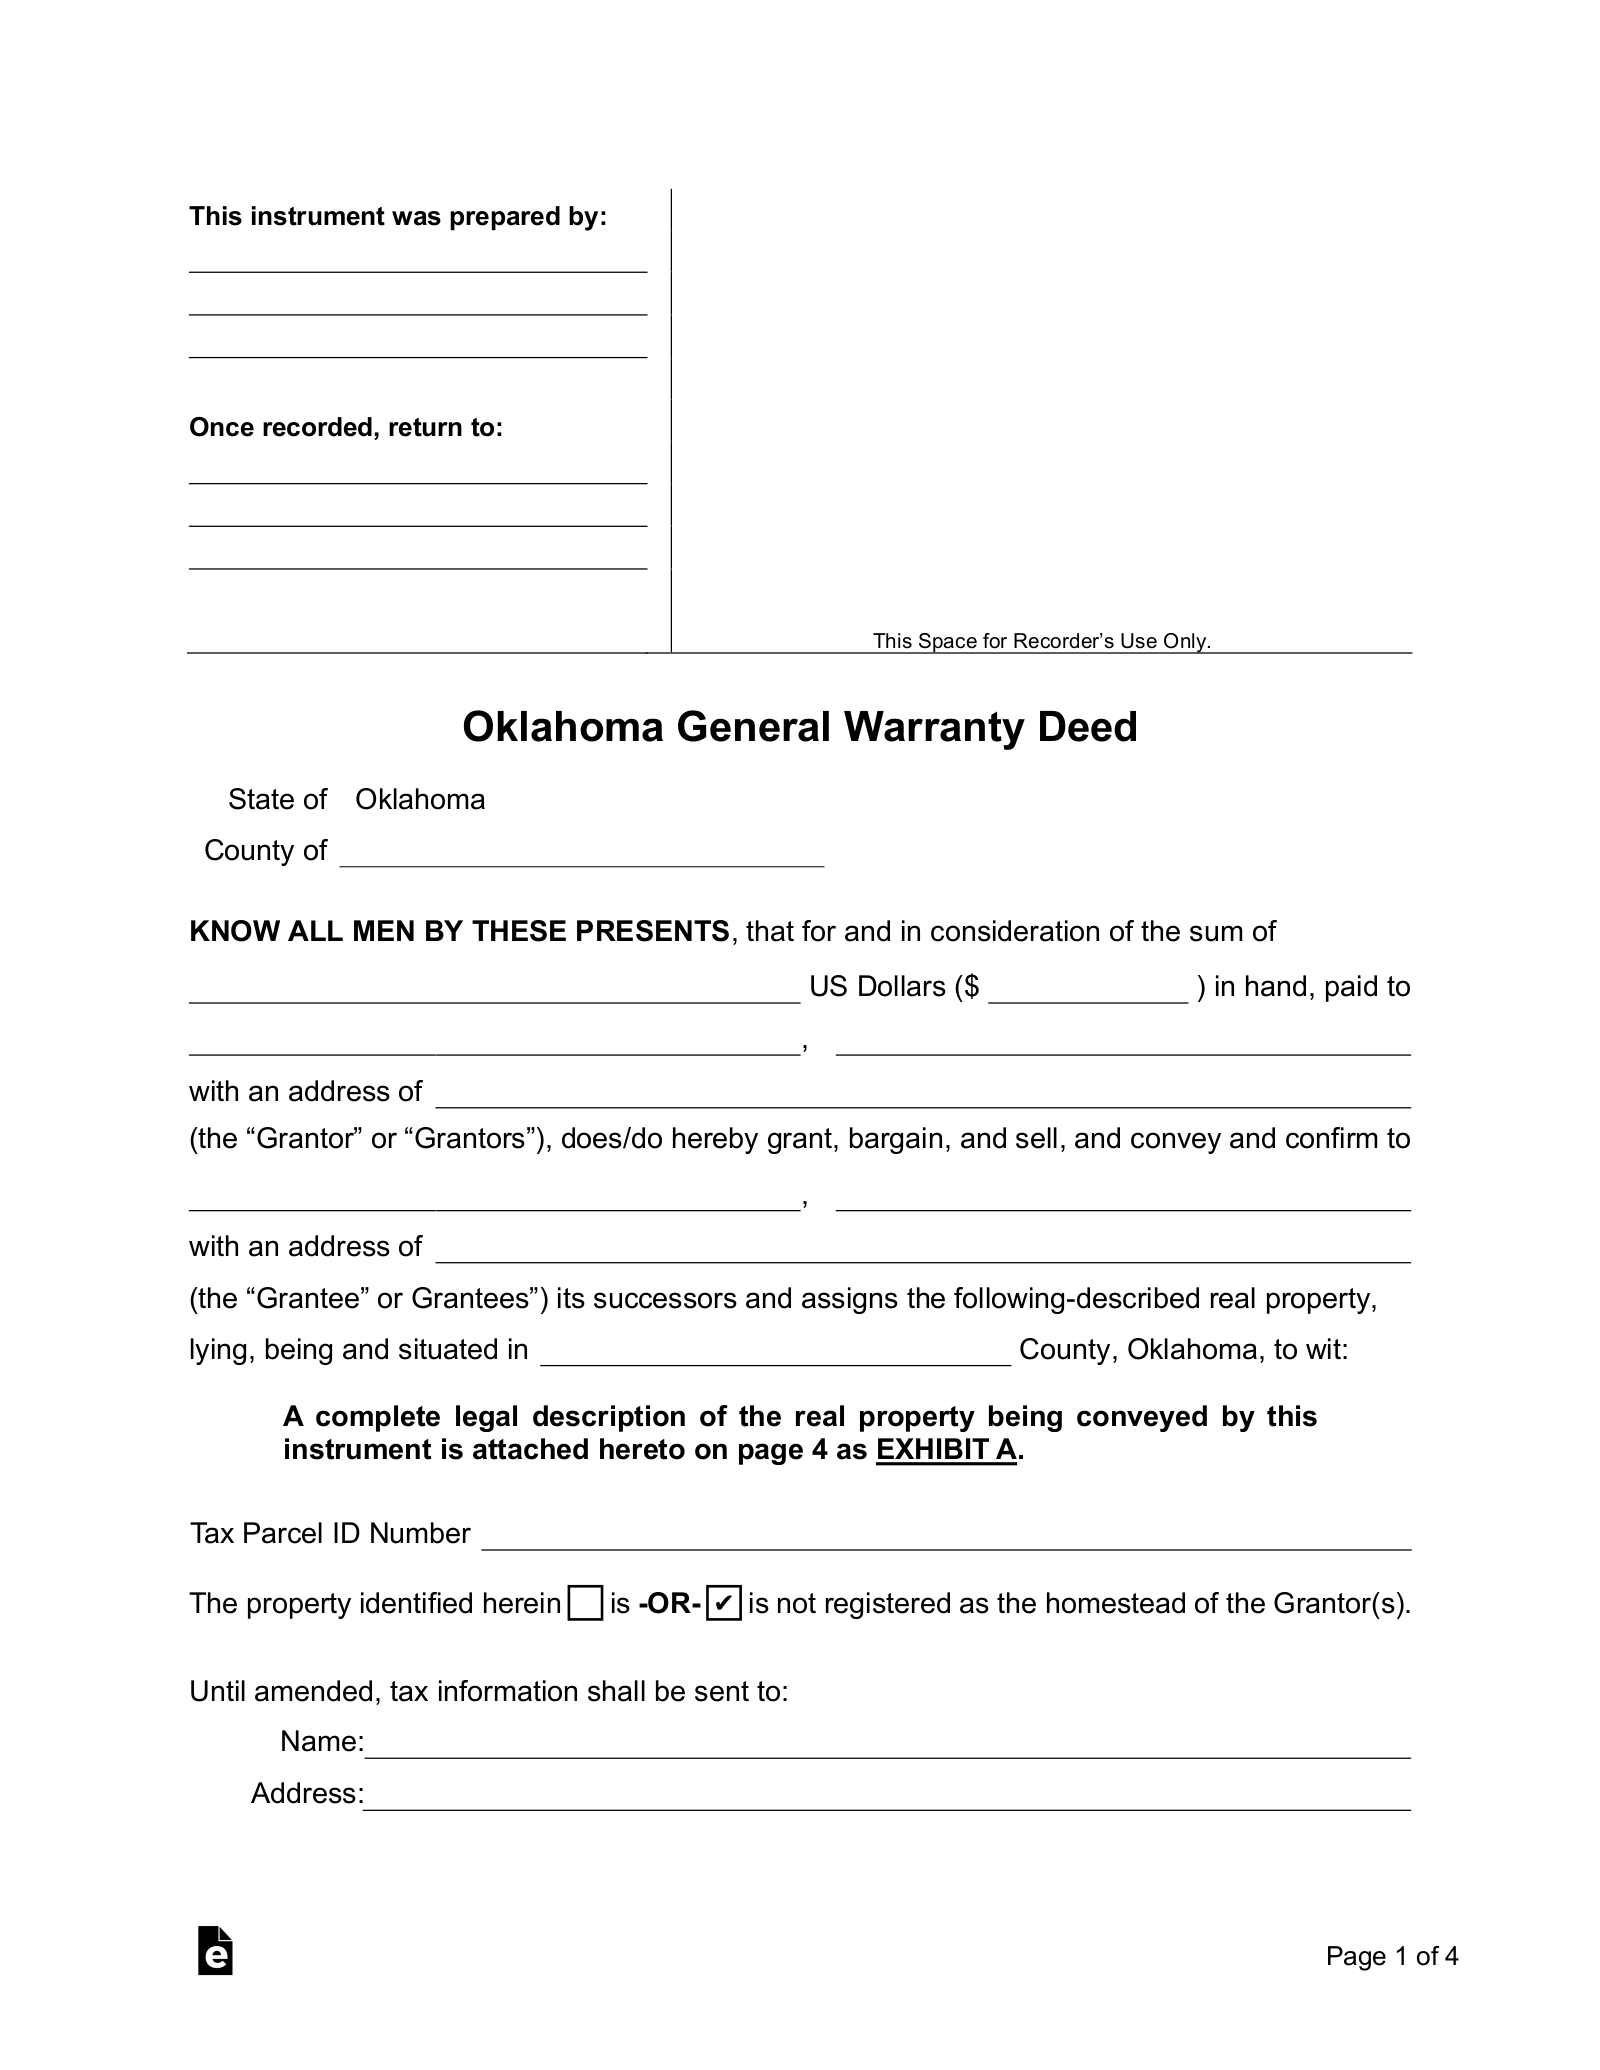 Oklahoma General Warranty Deed Form